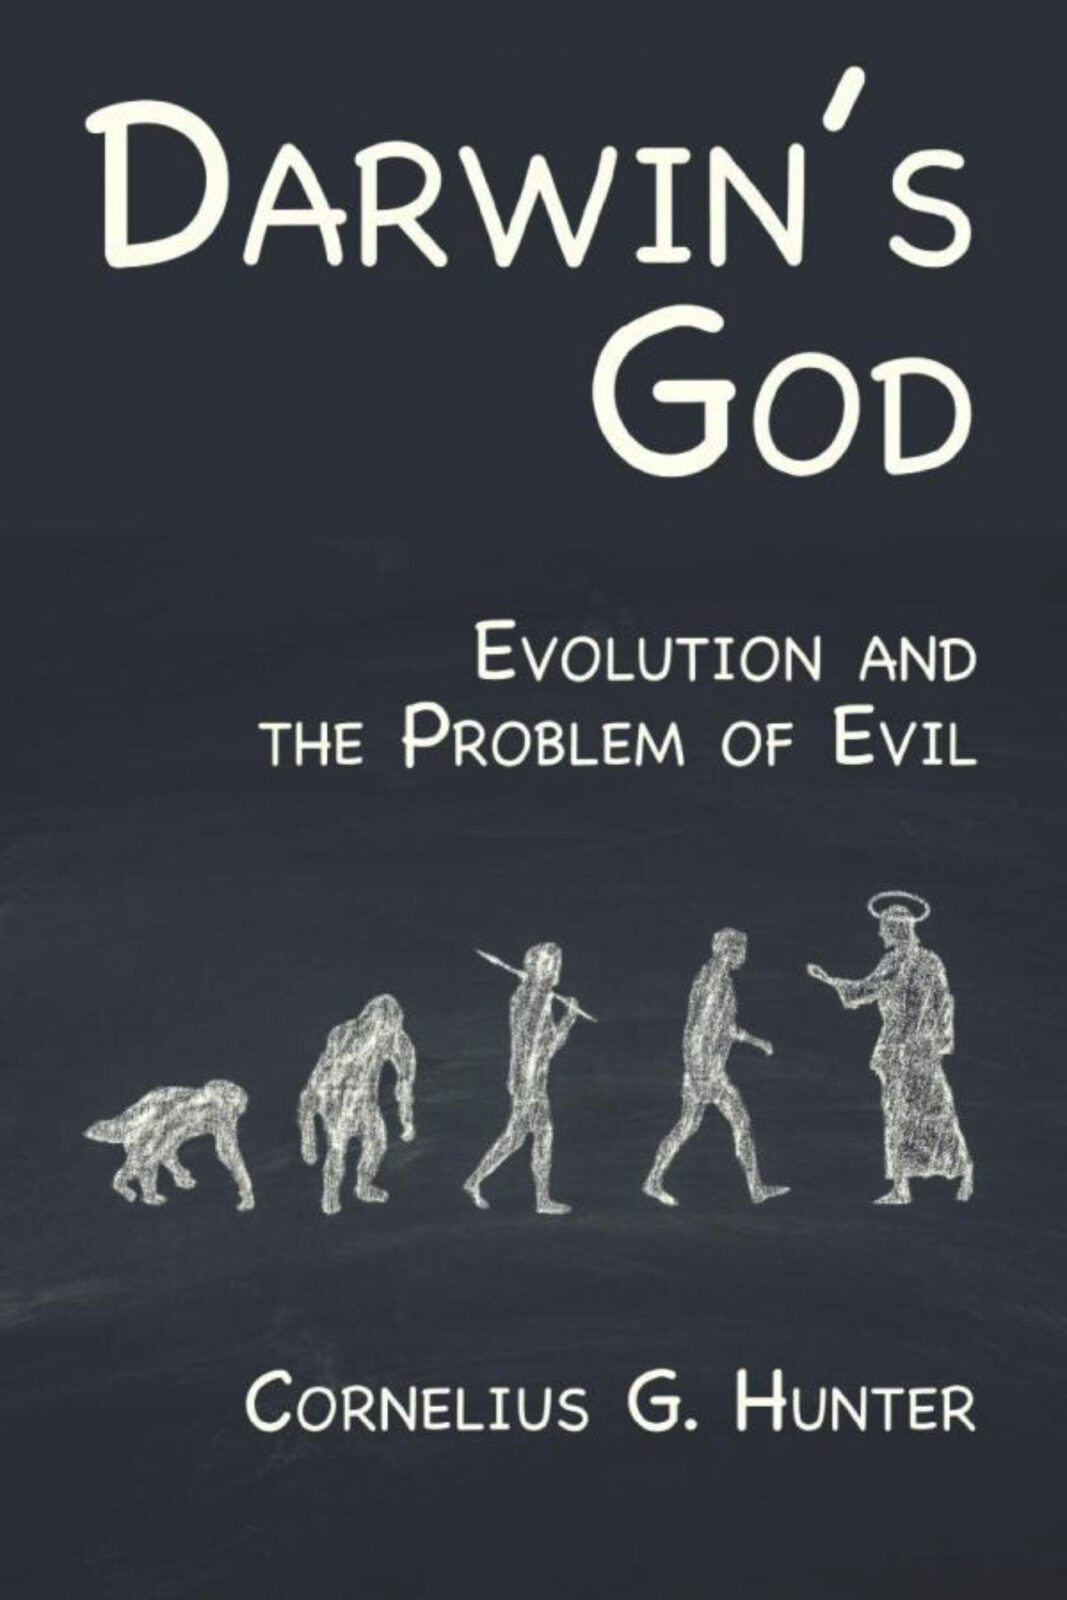 Darwin's God by Cornelius G. Hunter